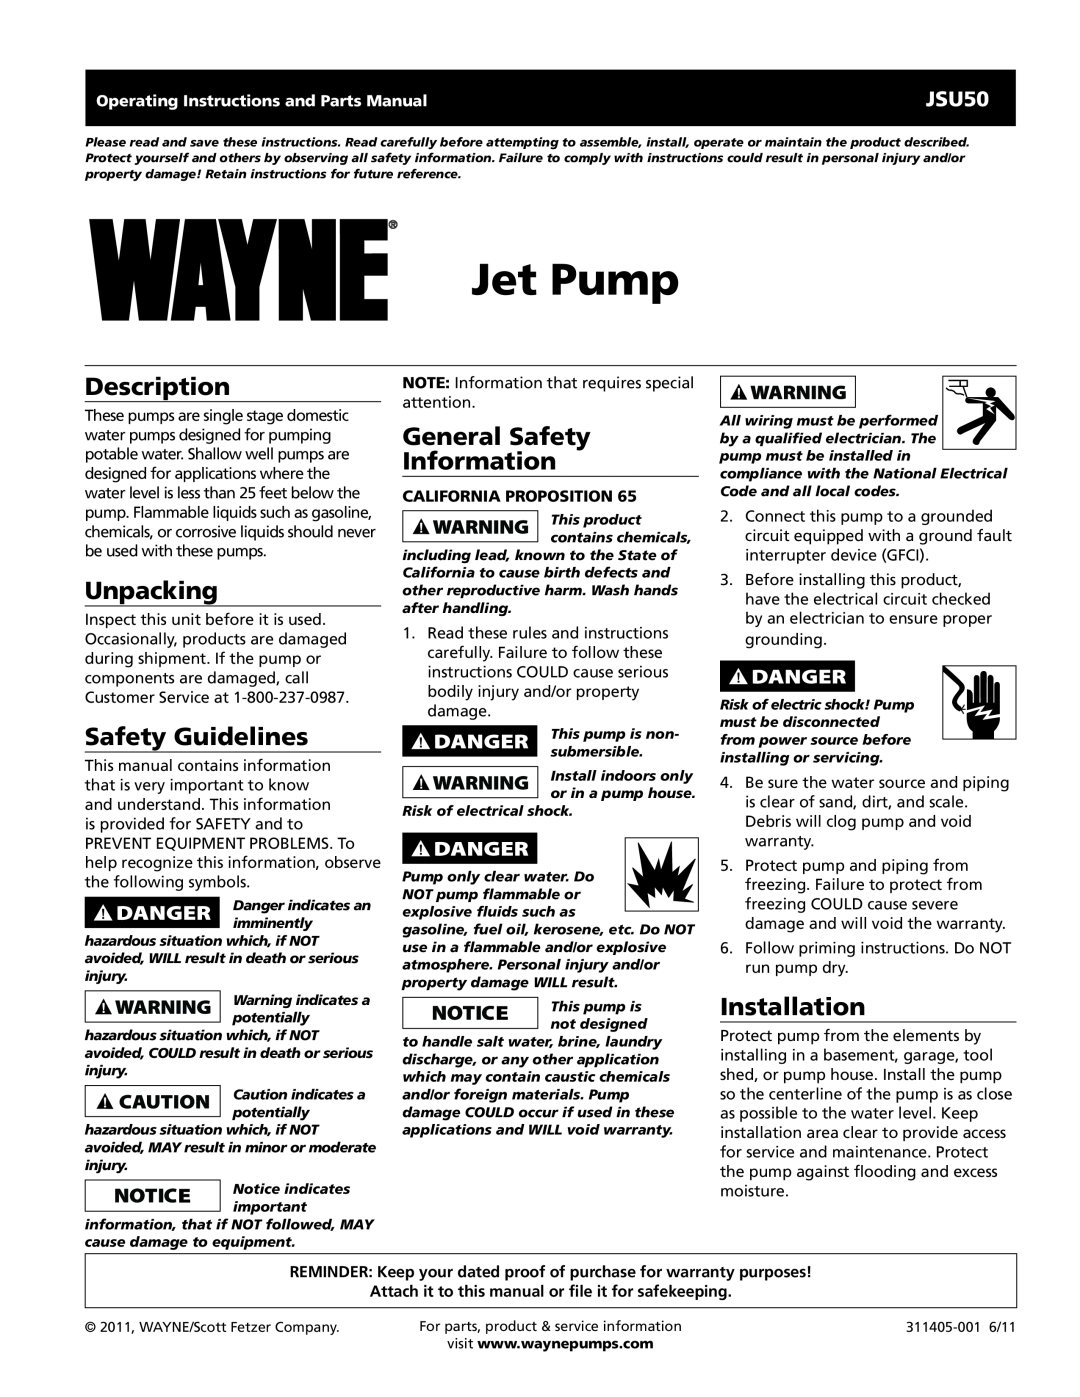 Wayne JSU50 operating instructions Jet Pump, Description, Unpacking, Safety Guidelines, General Safety Information 